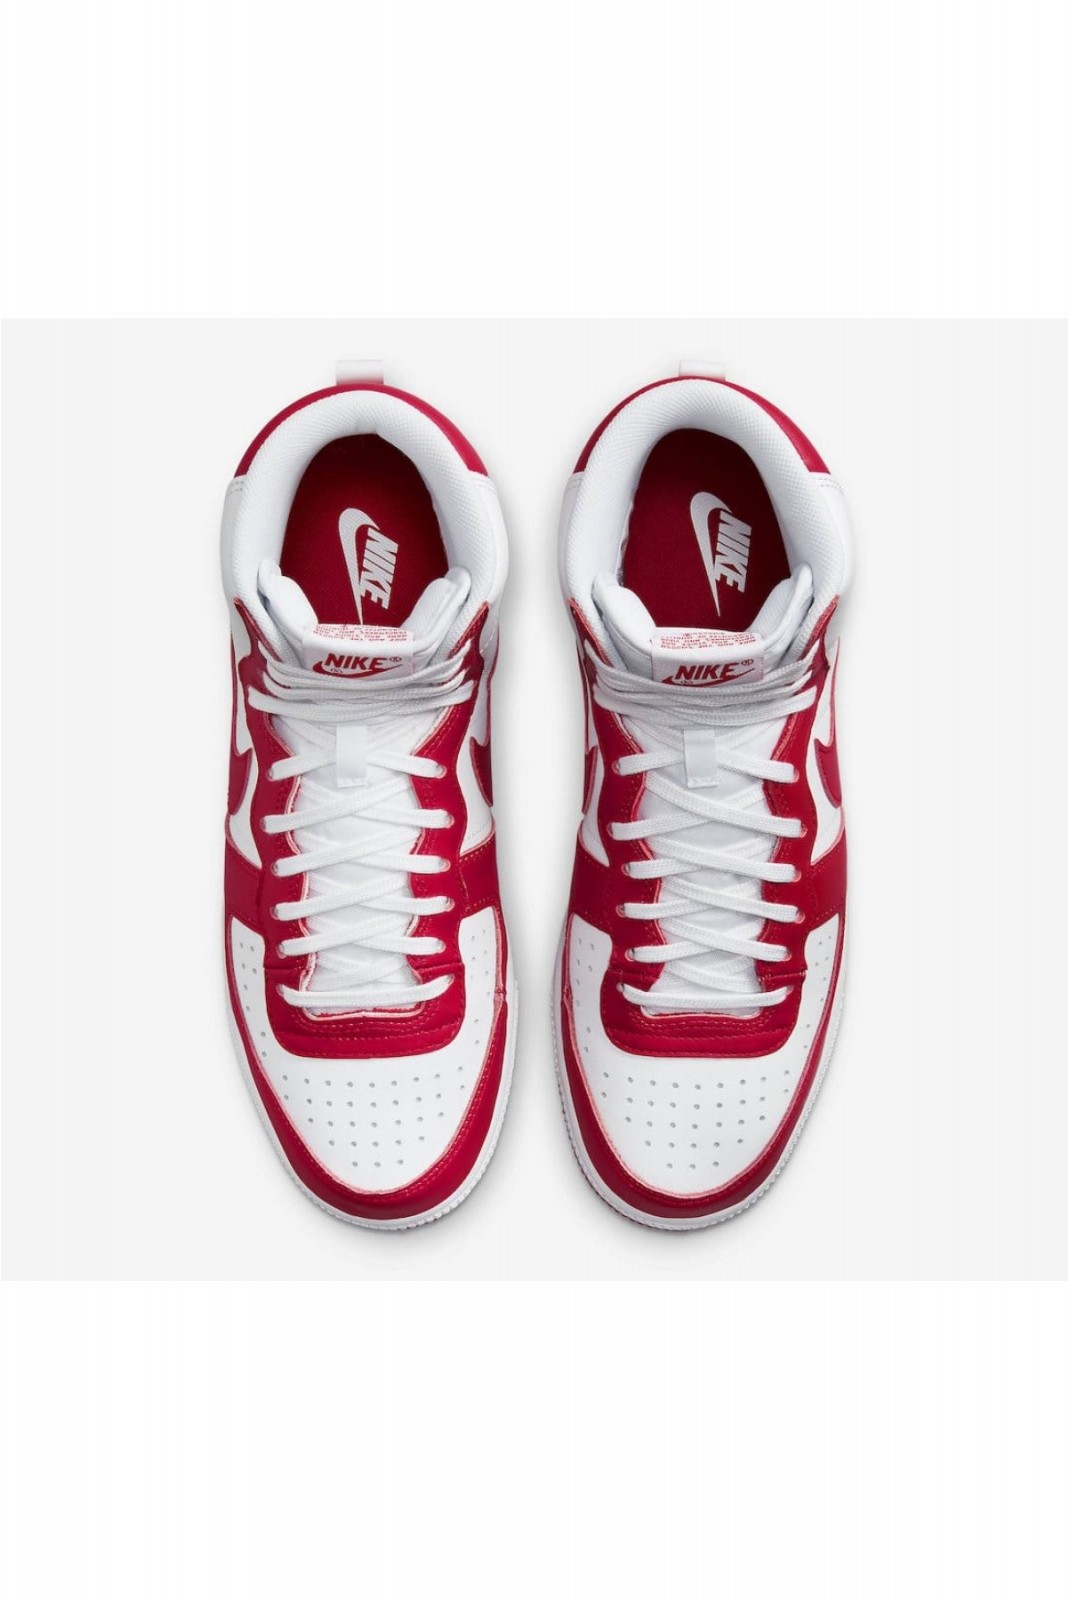 TERMINATOR HIGH Nike 100 RED FJ4454